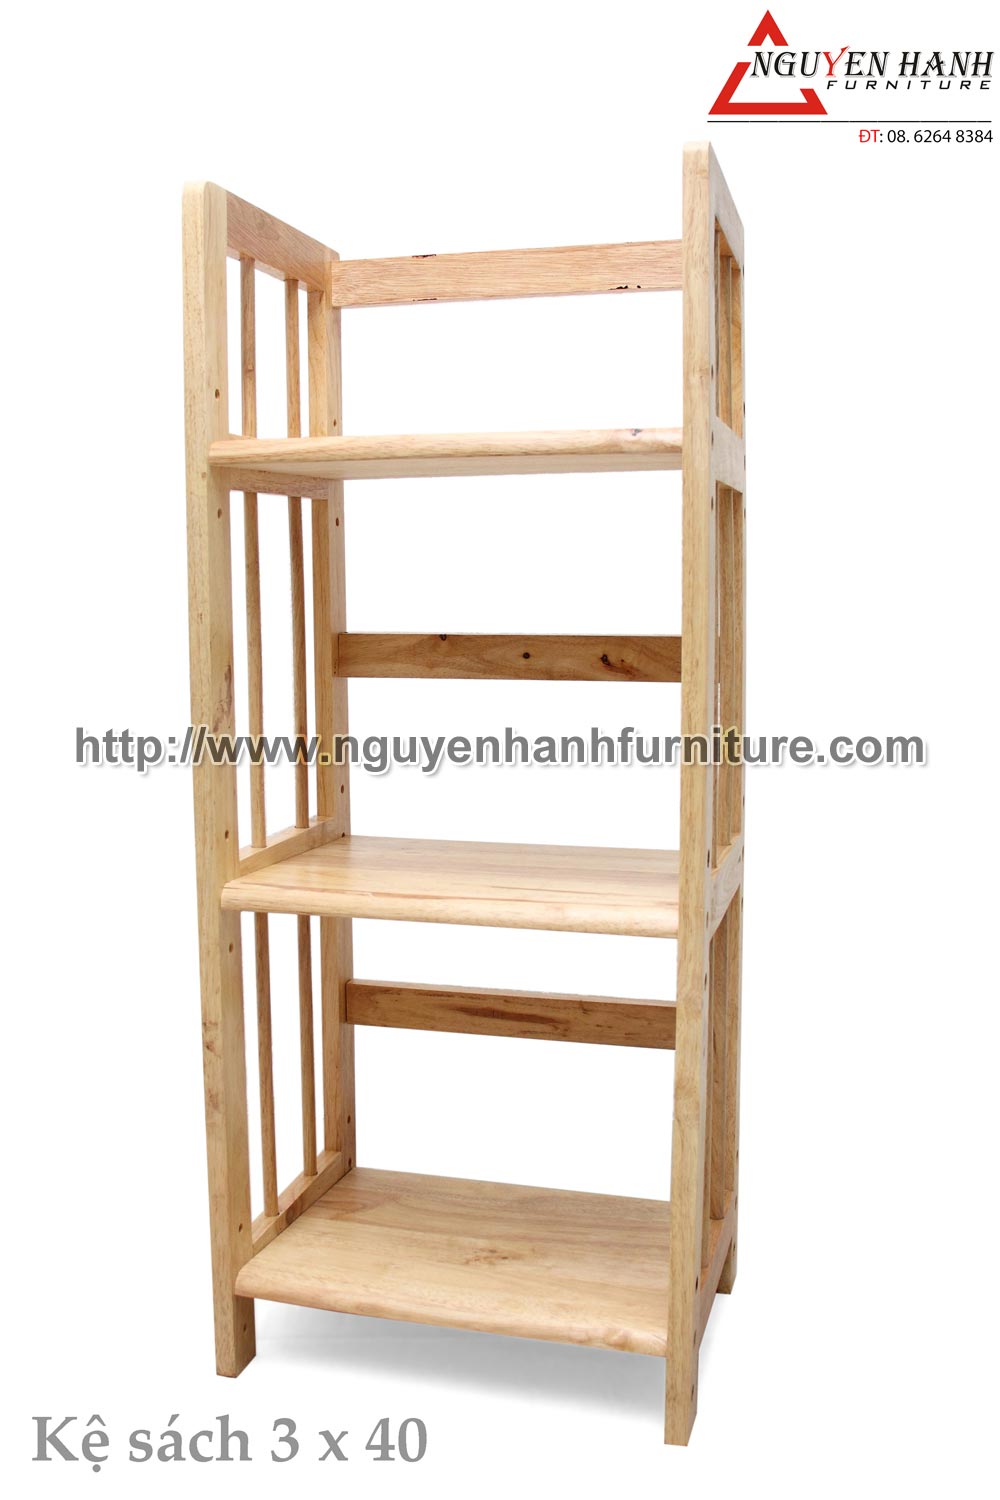 Name product: Triple storey Adjustable Bookshelf 40 (Natural) - Dimensions: 40 x 28 x 90 (H) - Description: Wood natural rubber